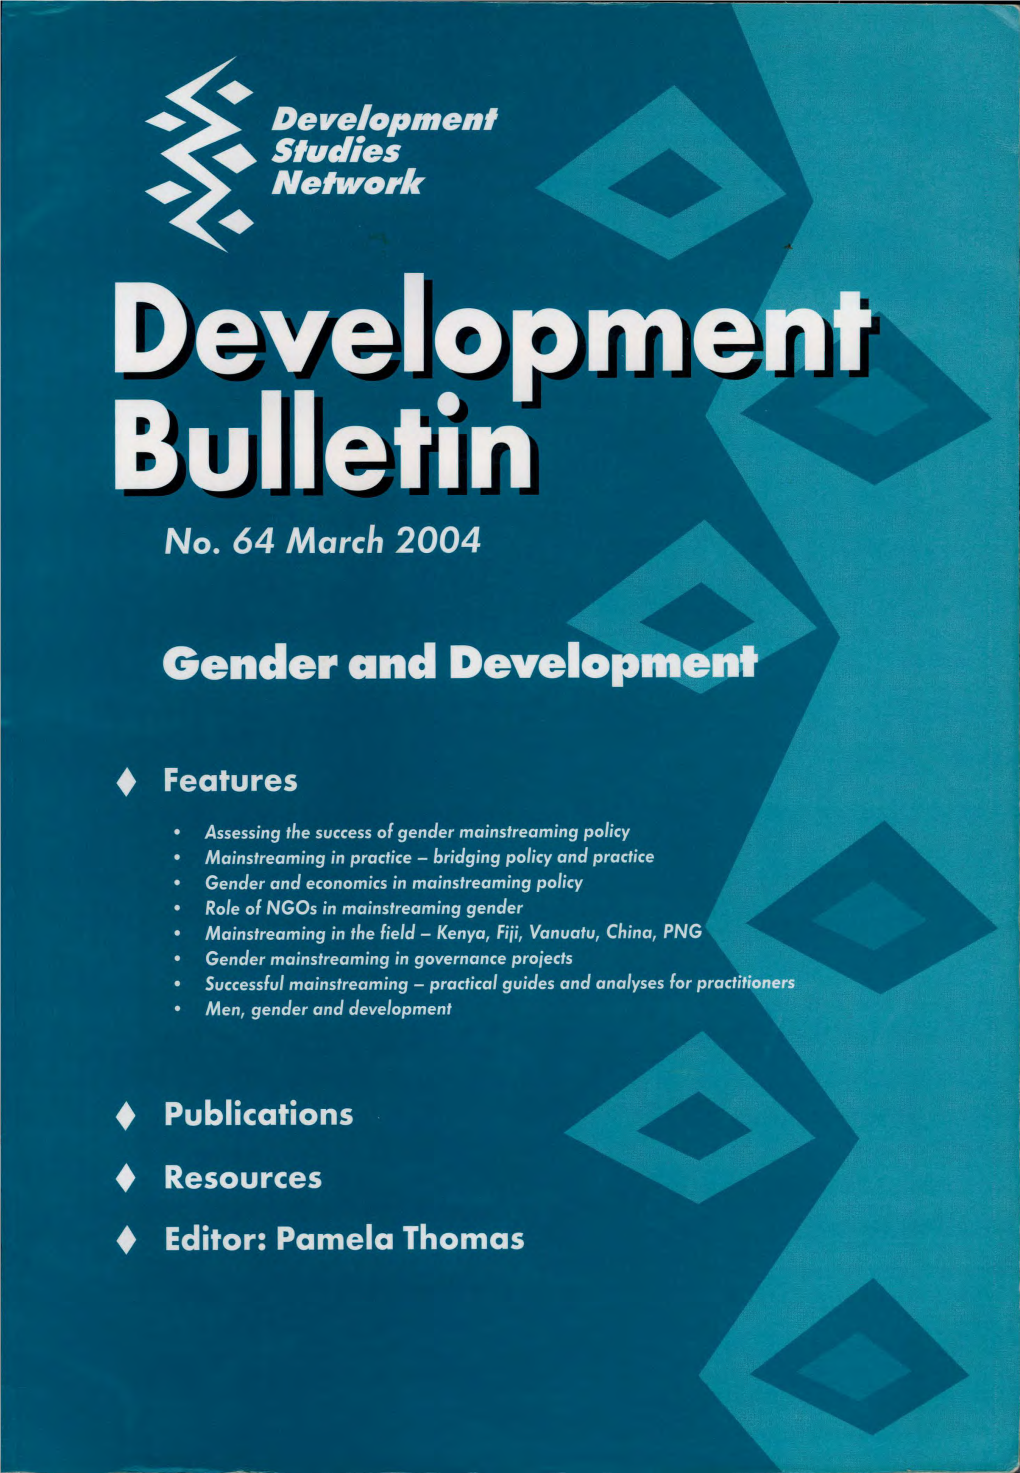 Gender and Development [PDF,4MB]